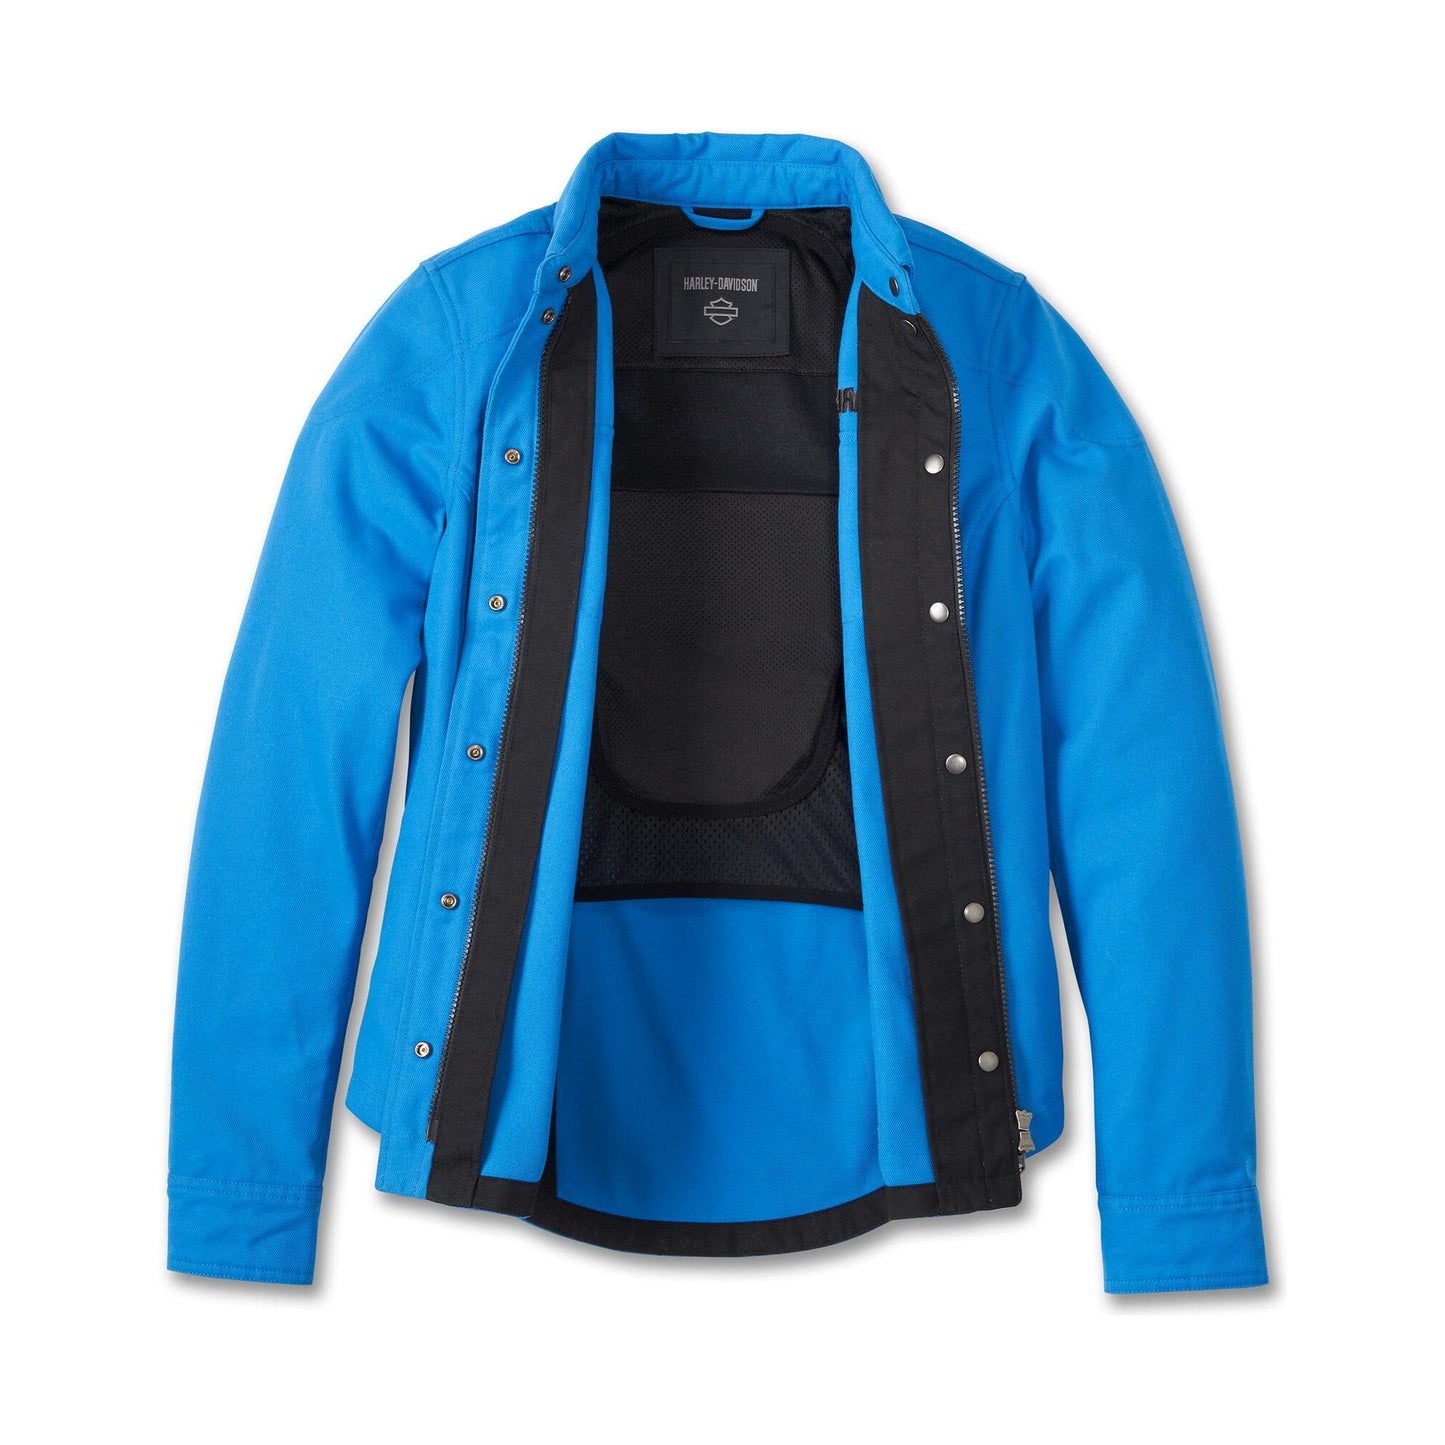 Harley-Davidson® Women's Operative Riding Shirt Jacket - Directoire Blue